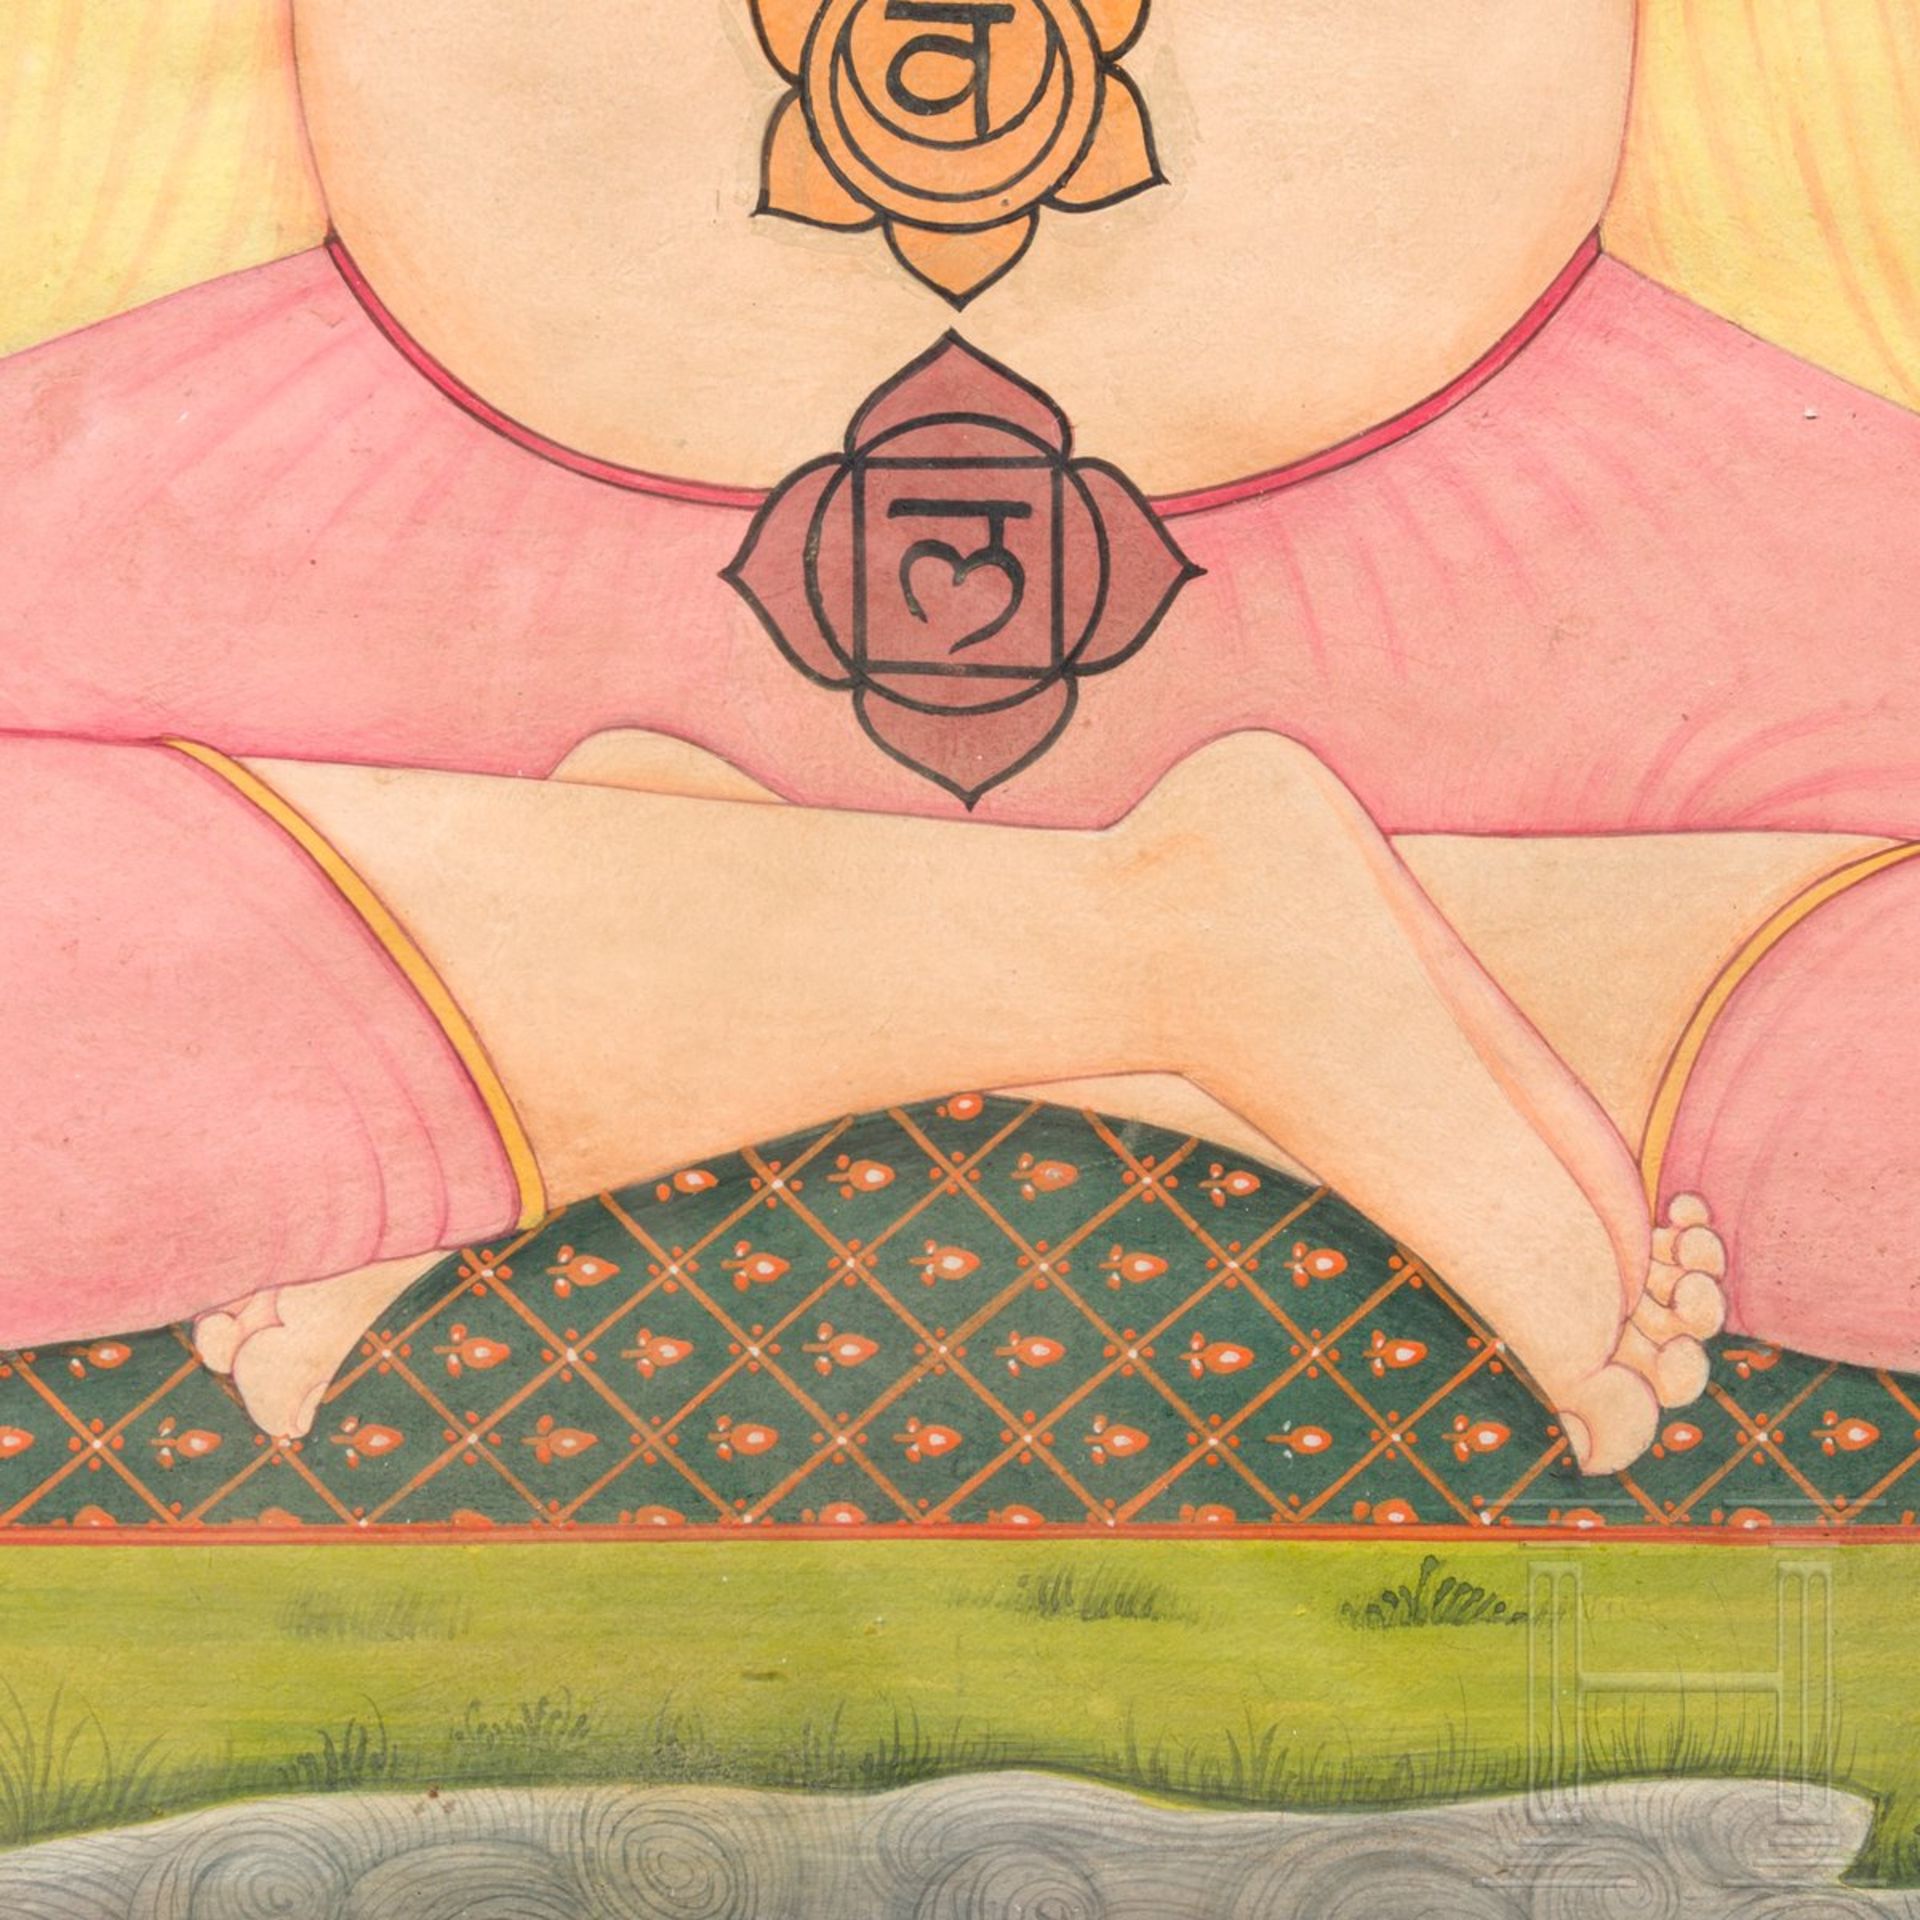 Yogi-Miniatur, Indien, Pahari, 19. Jhdt.Gouache auf Papier. Sitzender Yogi in "Lotus-Position" ( - Bild 4 aus 4